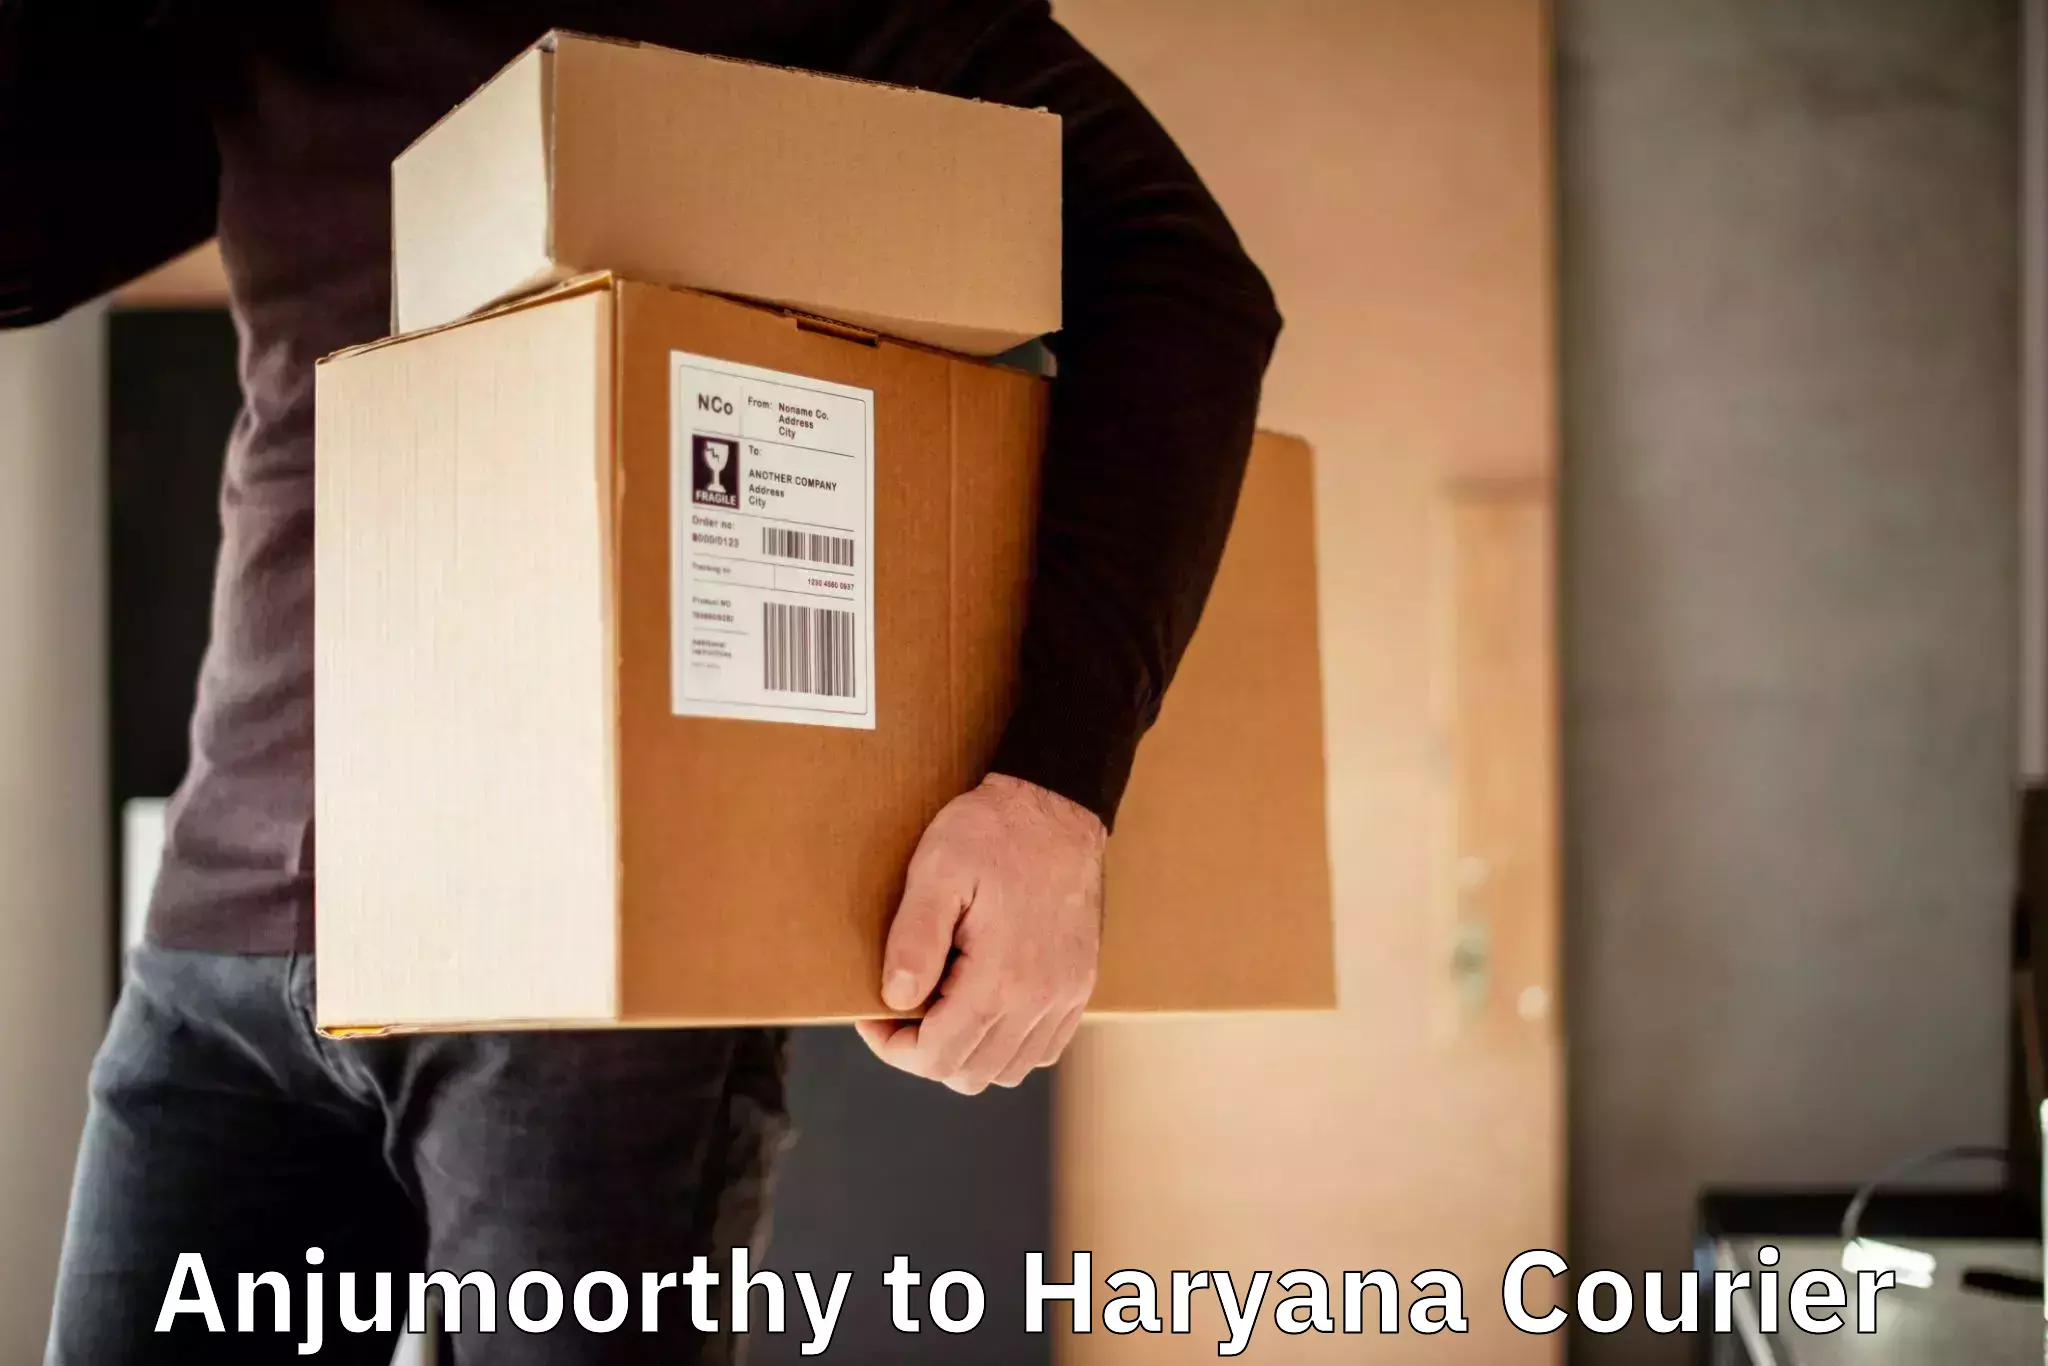 International courier networks Anjumoorthy to Haryana